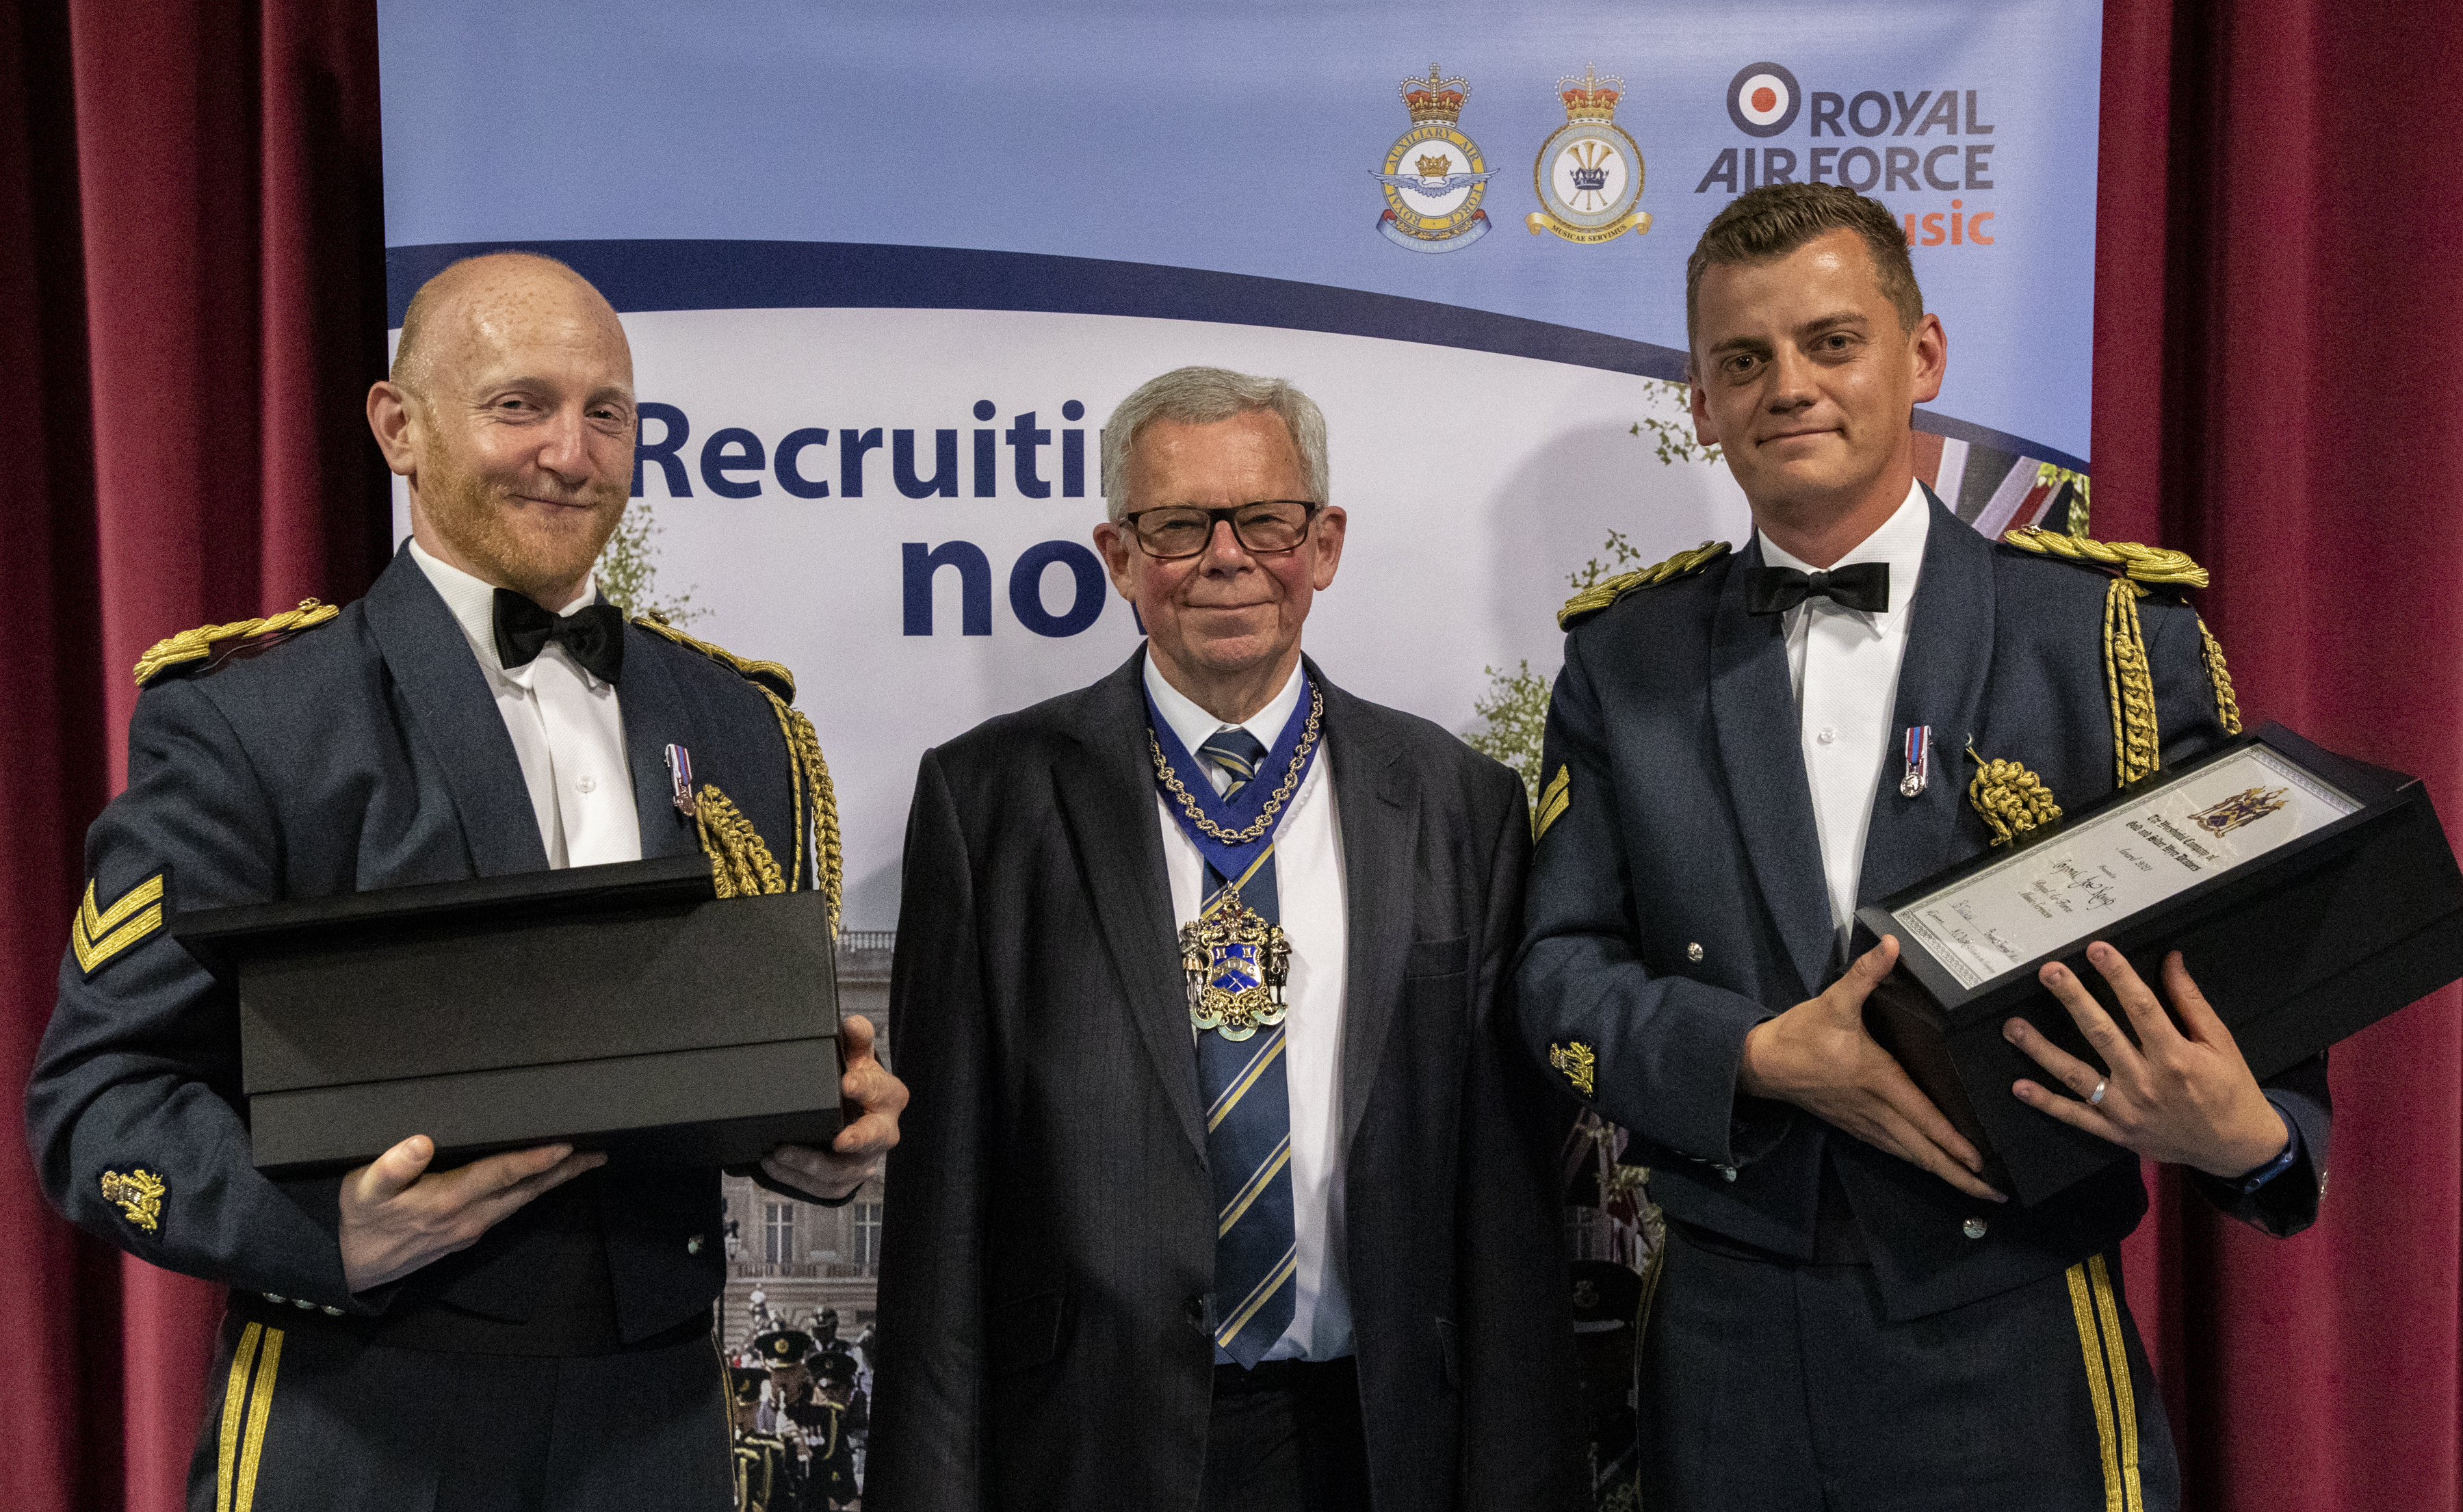 RAF Musicians hold certificate awards with Adjudicators.